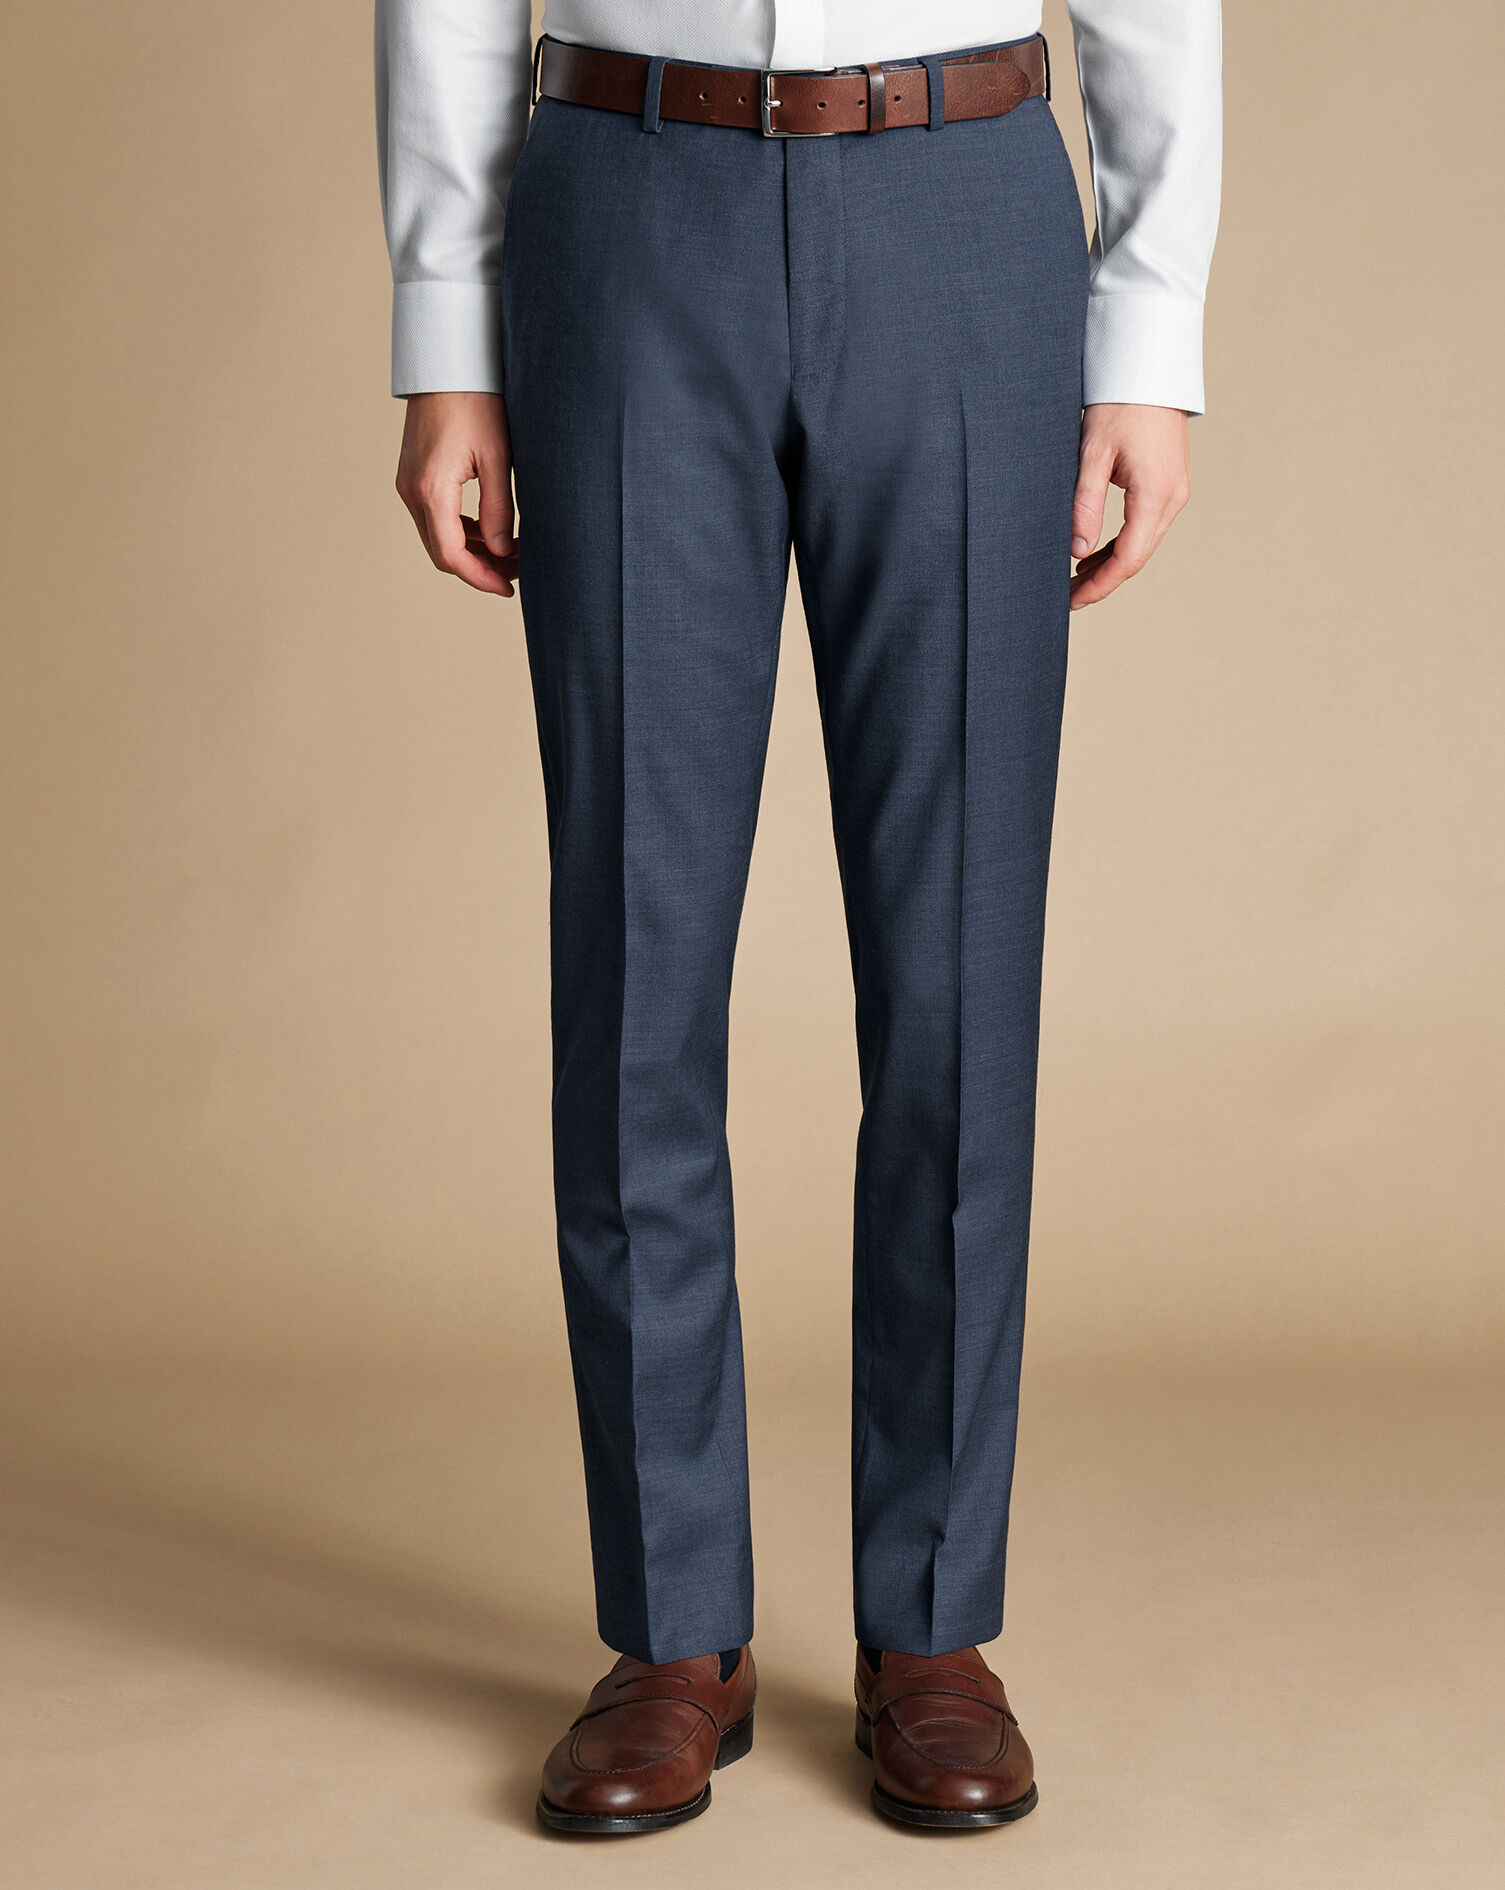 BRUNELLO CUCINELLI 595$ Sage Green Italian Fit Trousers - Pima Cotton  Gabardine | eBay